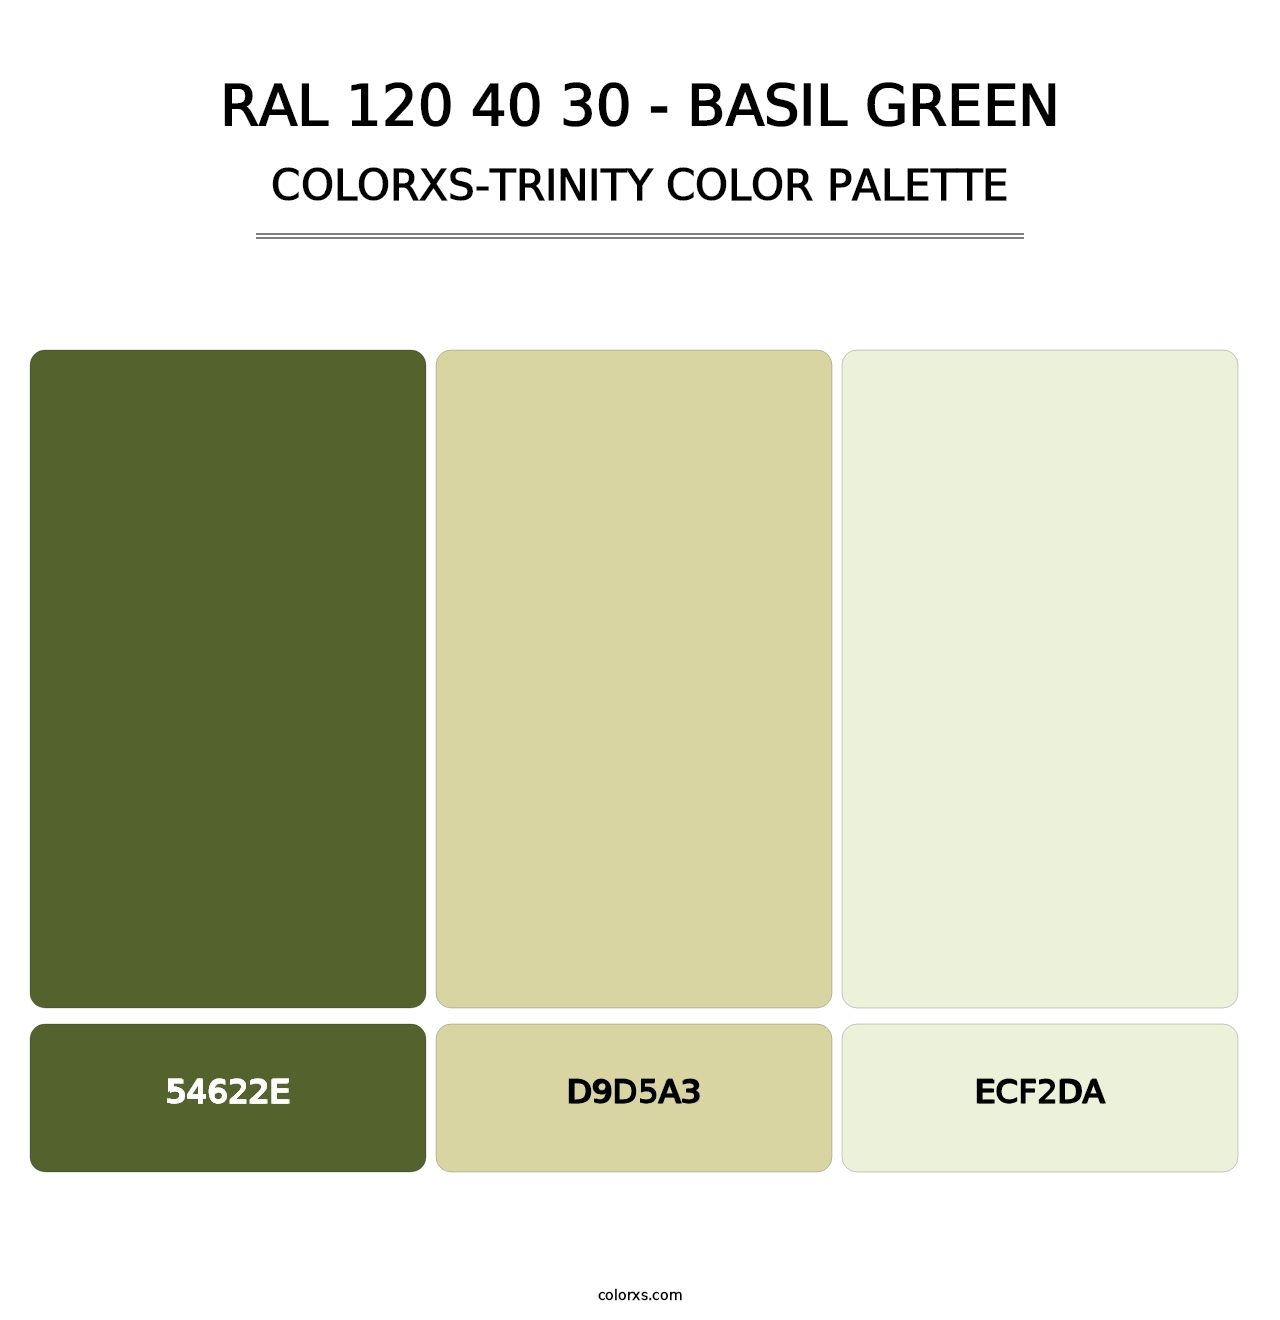 RAL 120 40 30 - Basil Green - Colorxs Trinity Palette